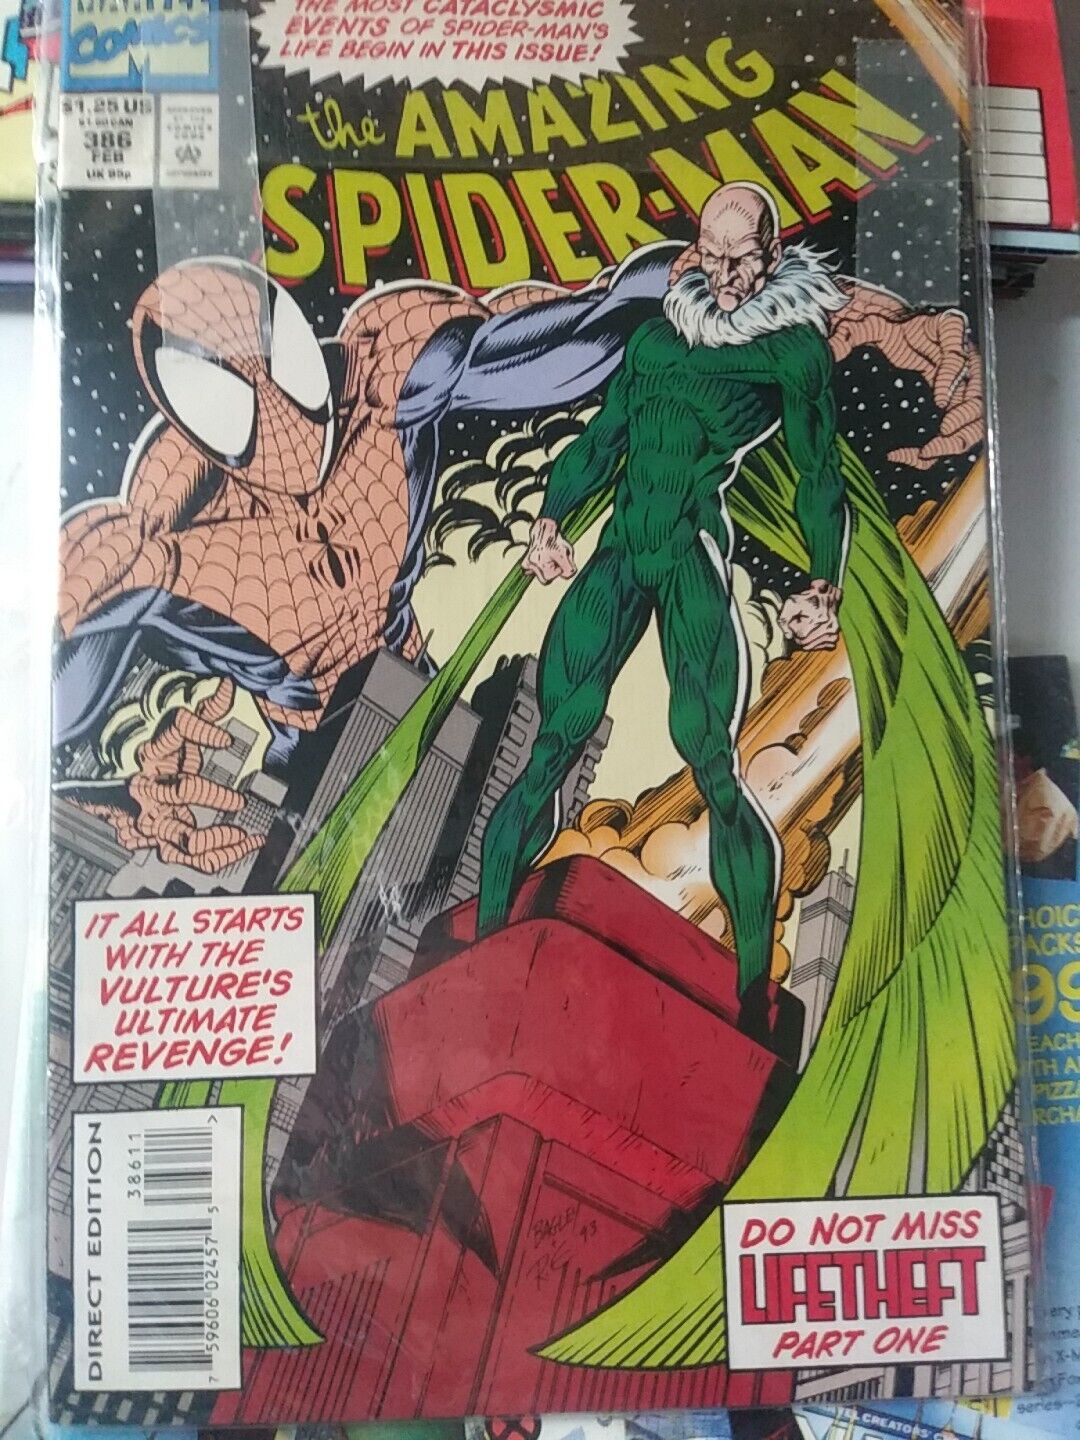 The Amazing Spider-Man #386 (Marvel Comics February 1994)